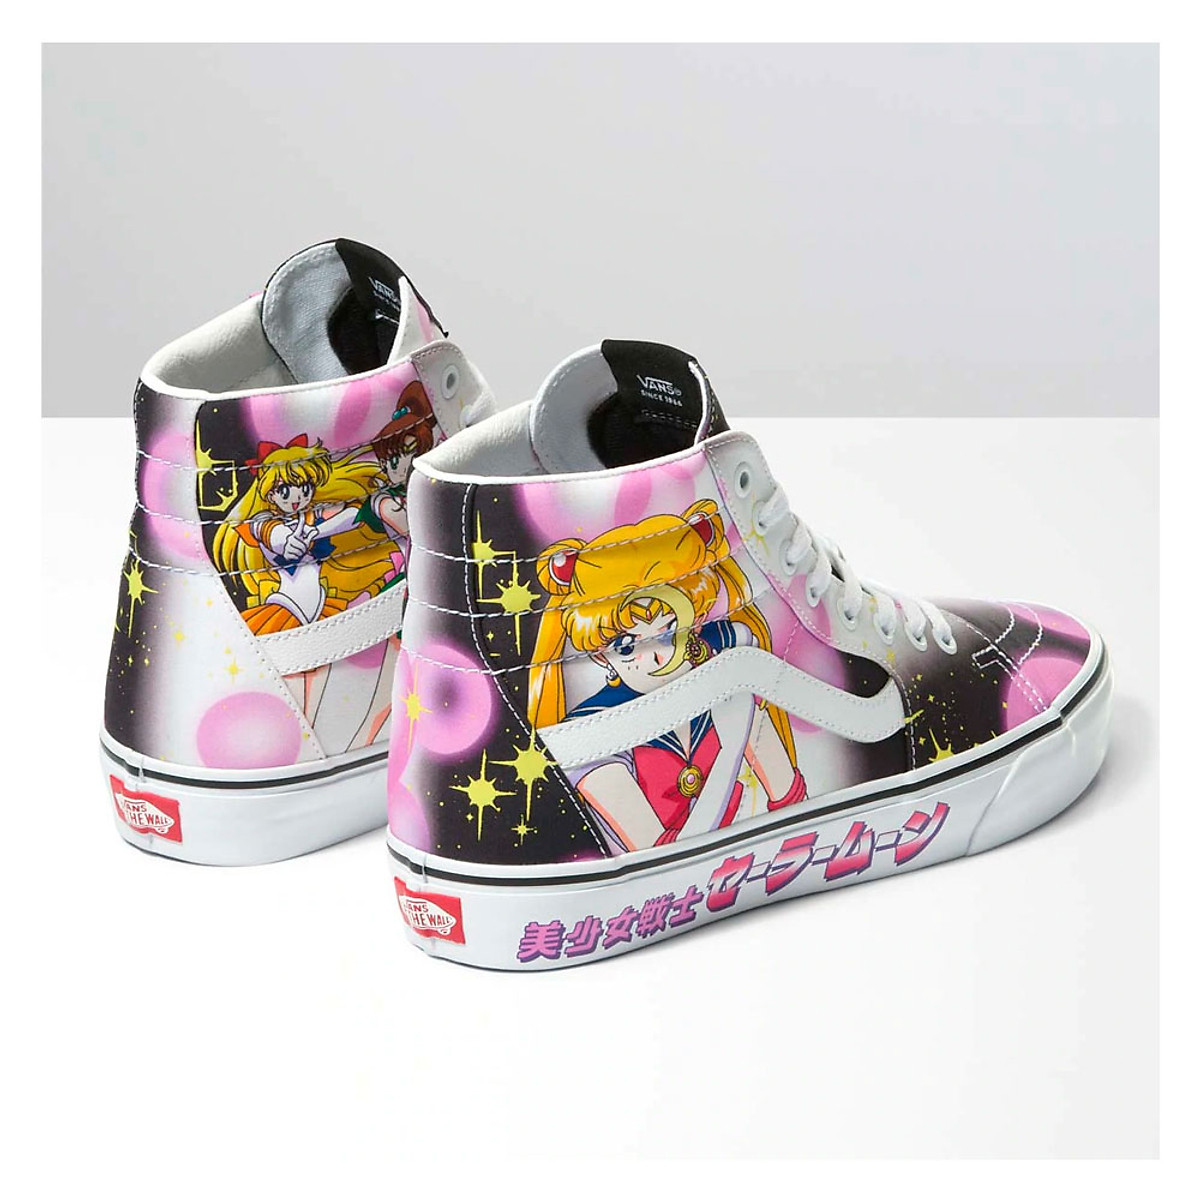 Sailor Moon x Vans Has Chunky Sneakers & Kawaii Apparel